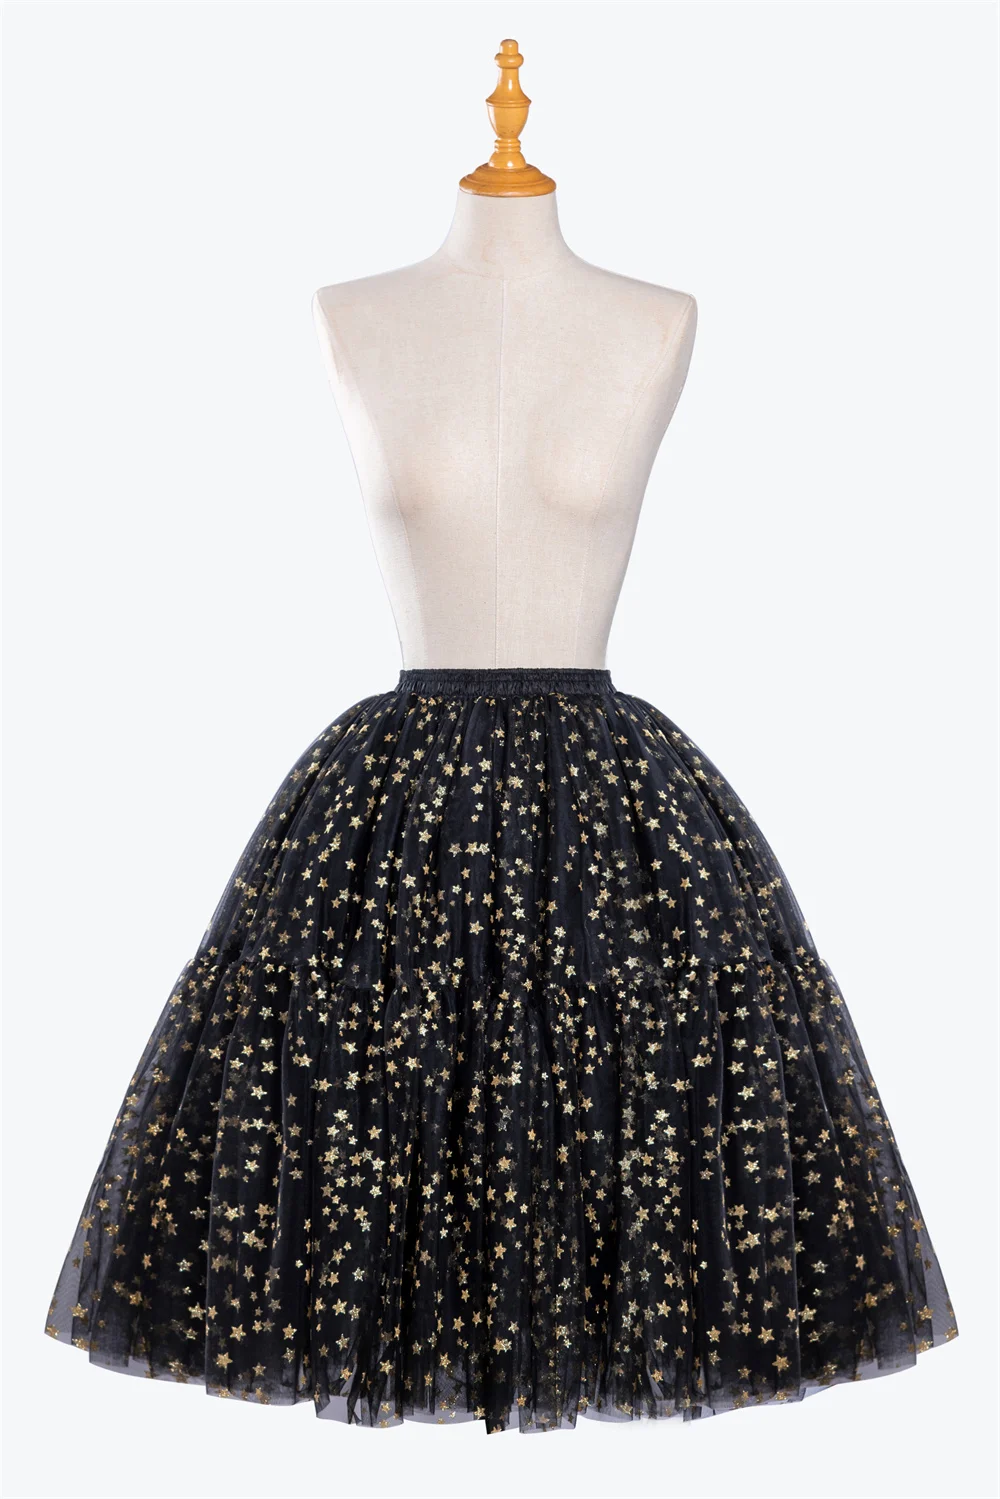 Black Glitter Sequin Star Petticoat Women Adult Elastic Waist Tulle Promparty Skirt Long Champagne Brown Princess Underskirt